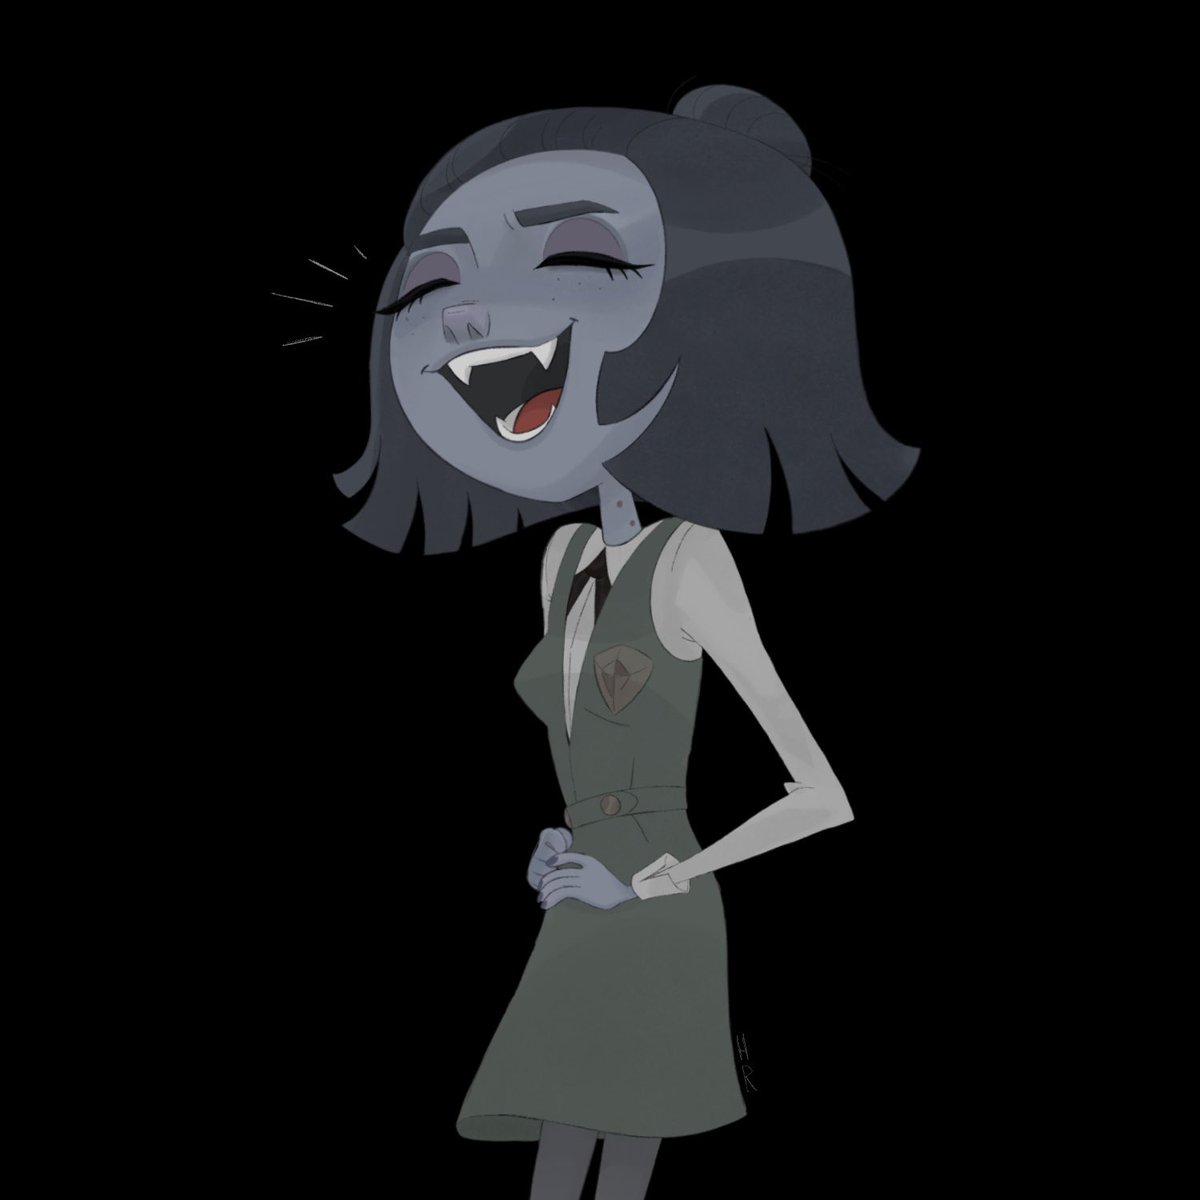 I love revisiting my vampire girl character ♥️